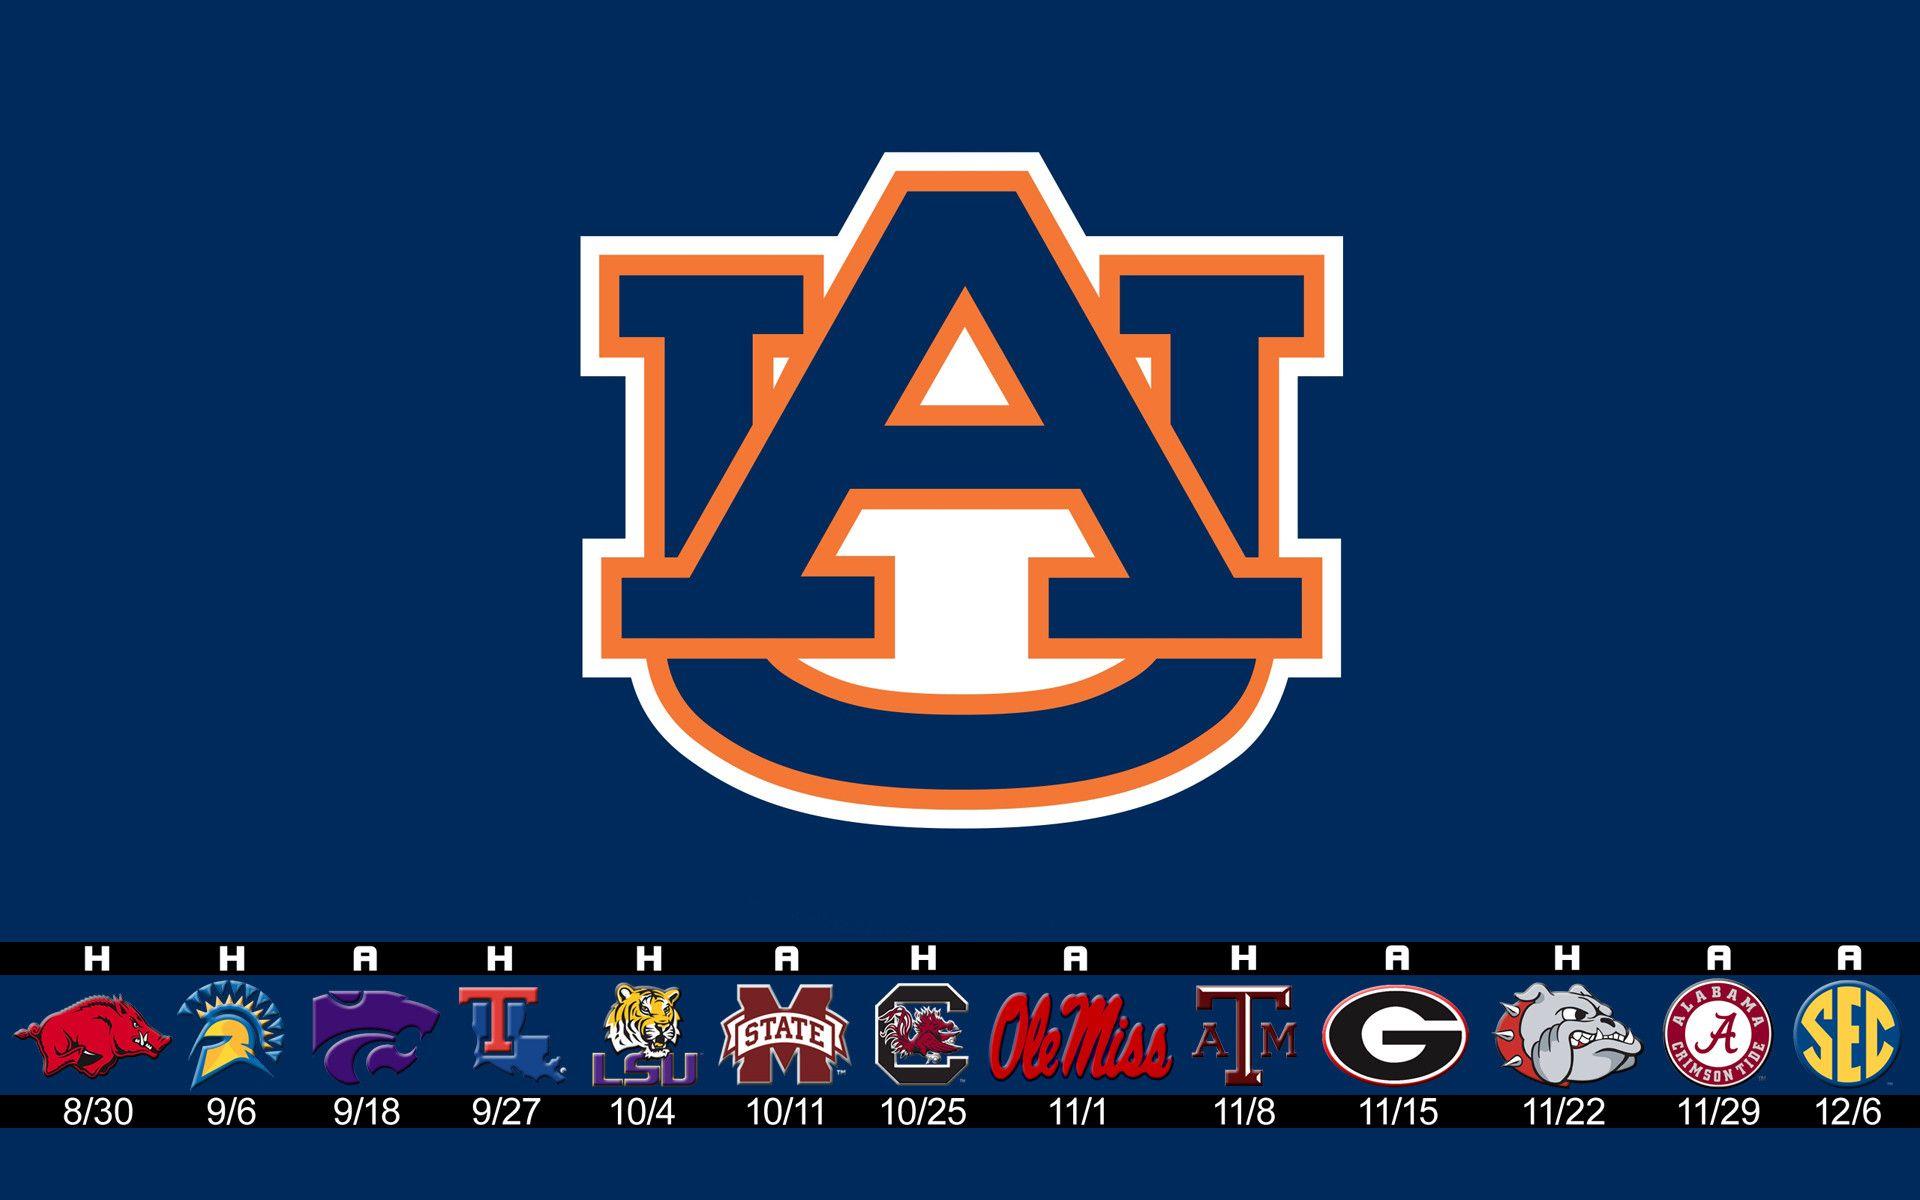 Auburn 2014 Football Schedule Wallpaper, 44 Auburn 2014 Football